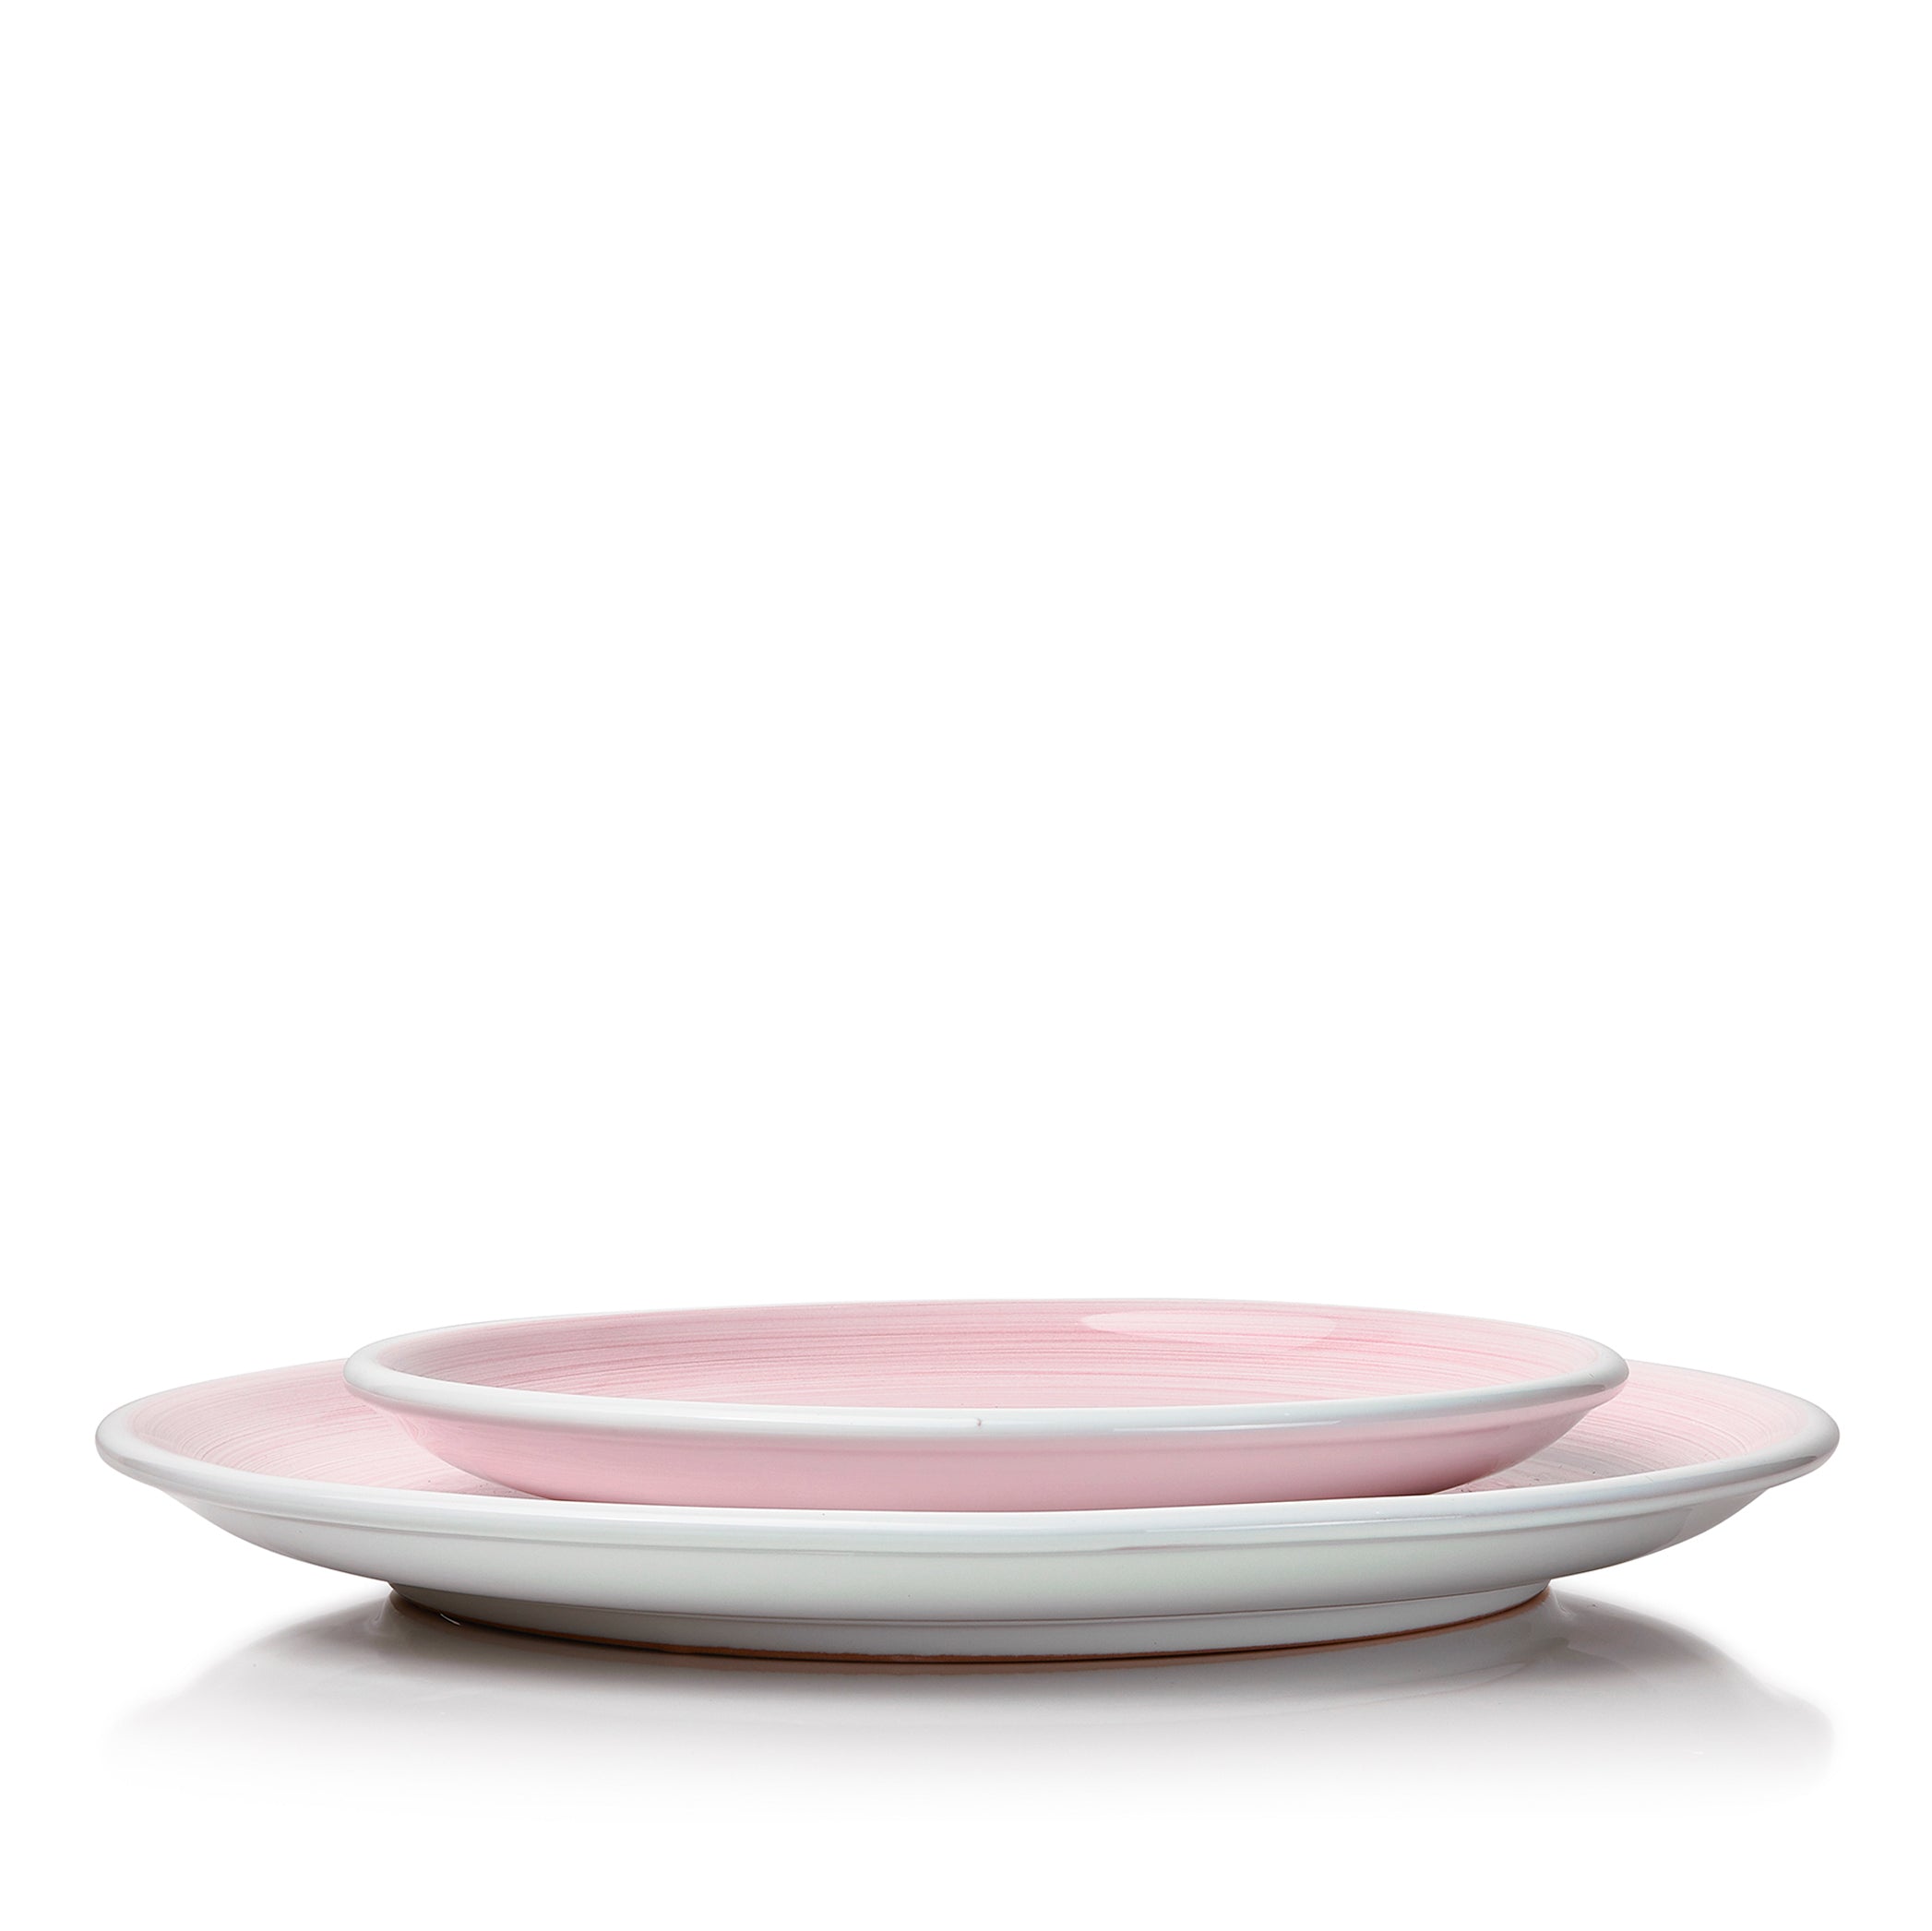 S&B 'Brushed' Ceramic Dinner Plate in Pastel Pink, 30cm